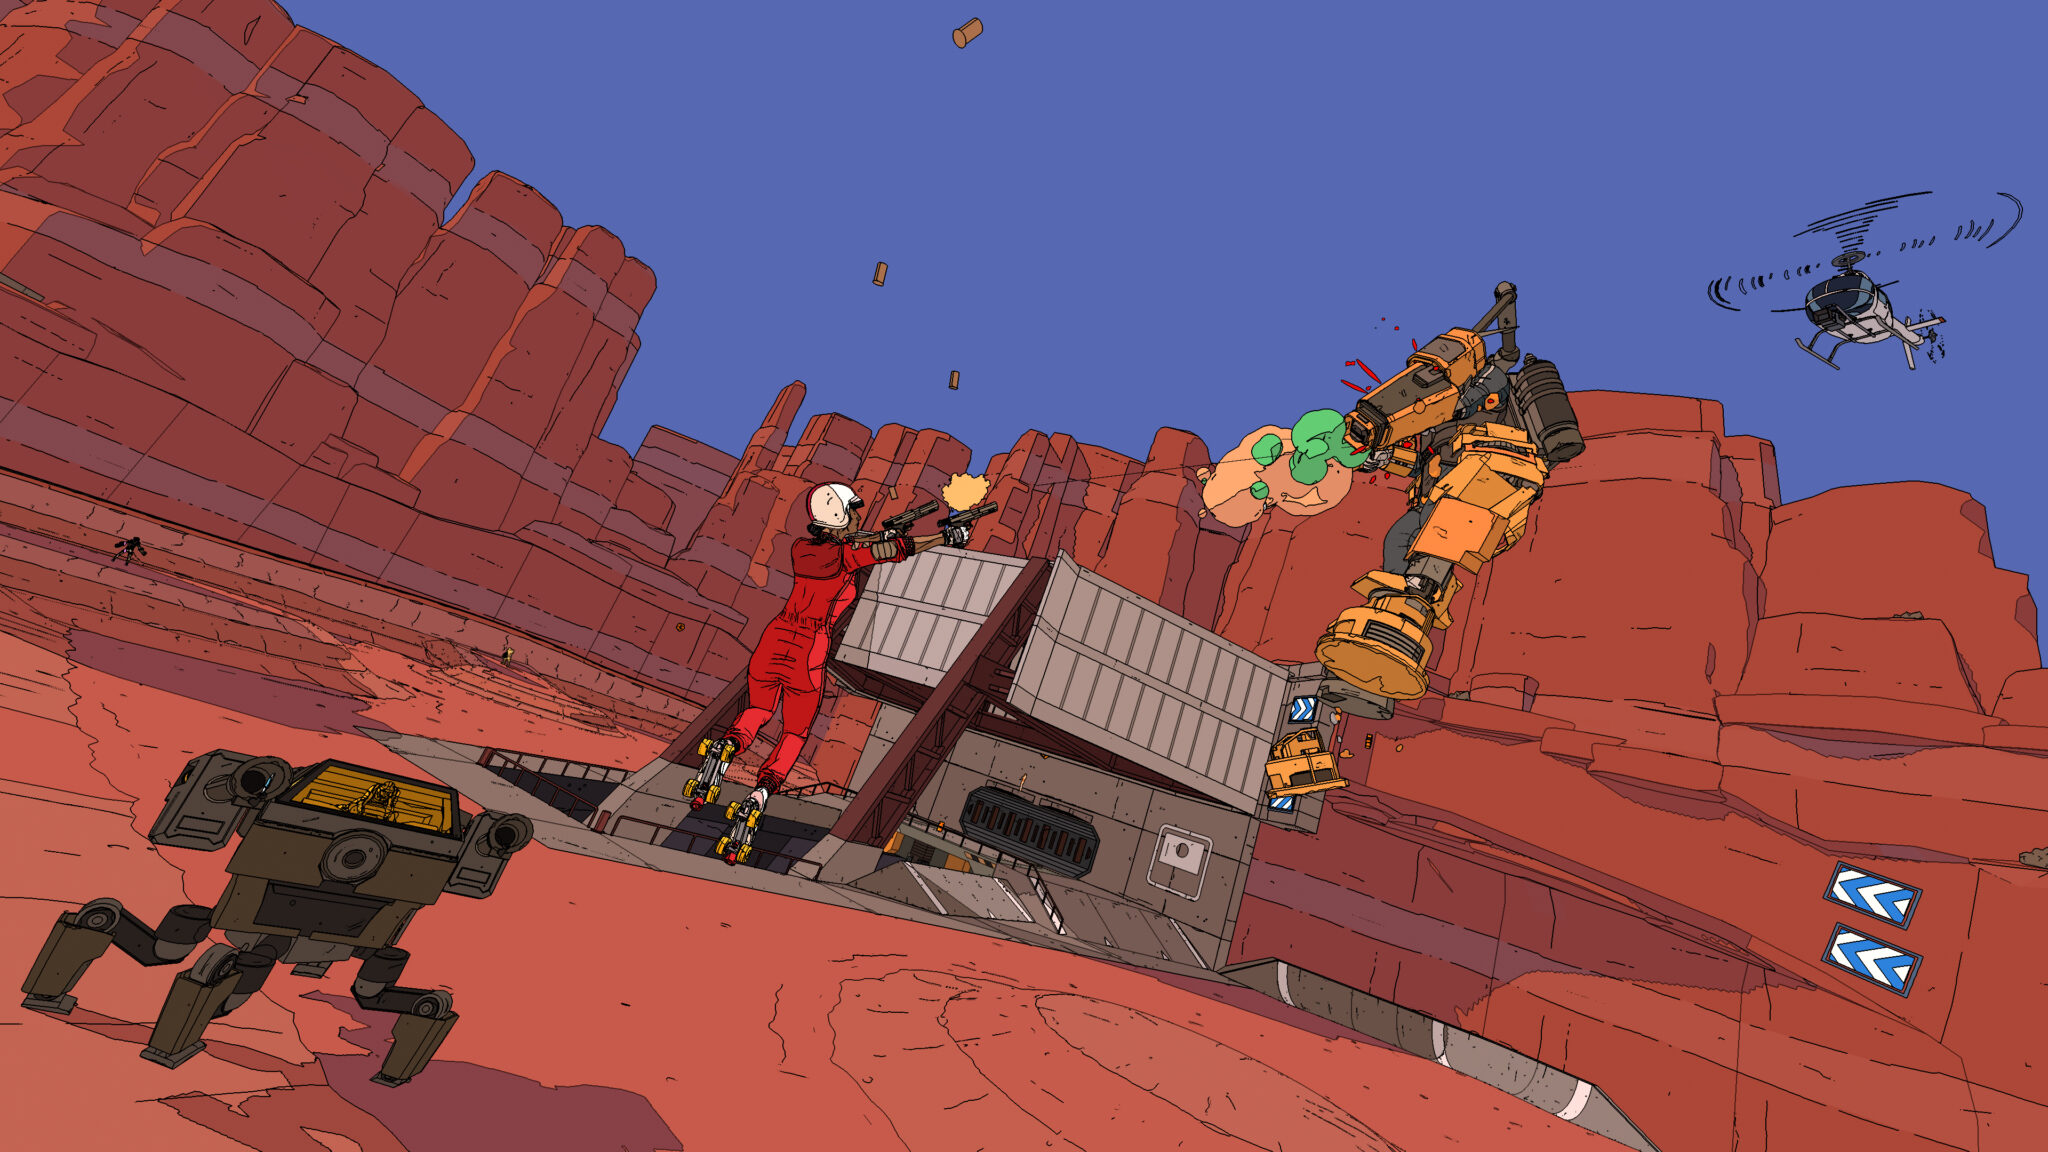 Rollerdrome screenshot of Kara jumping and shooting a mech